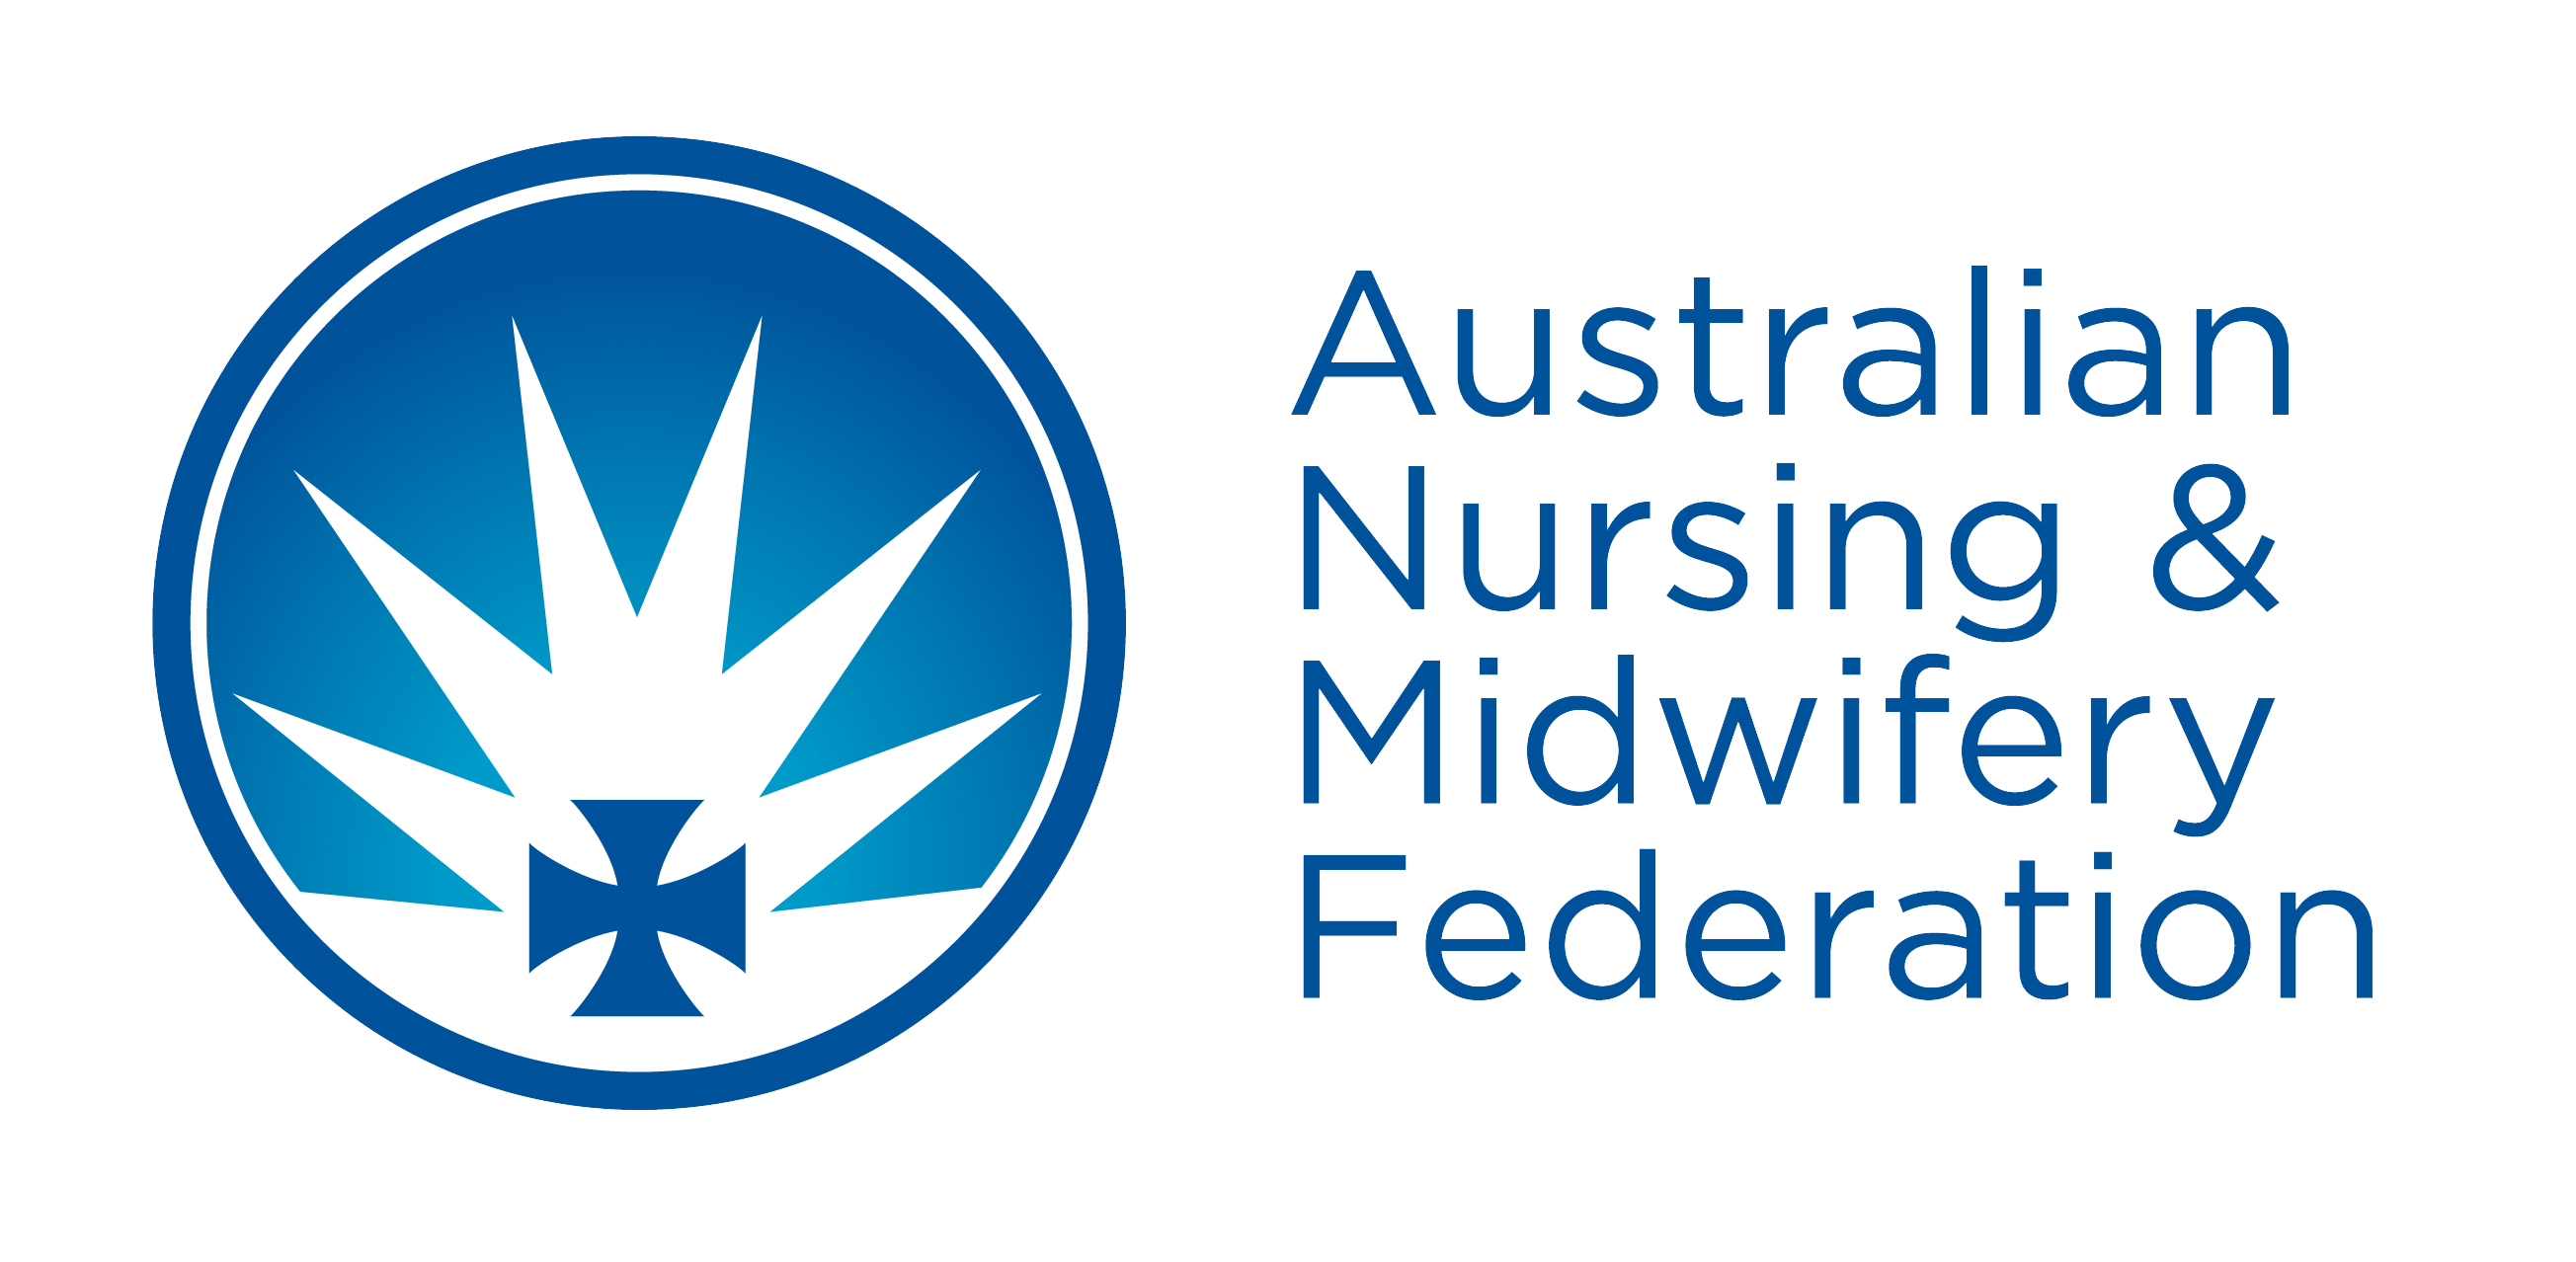 Australian Nursing and Midwifery Federation